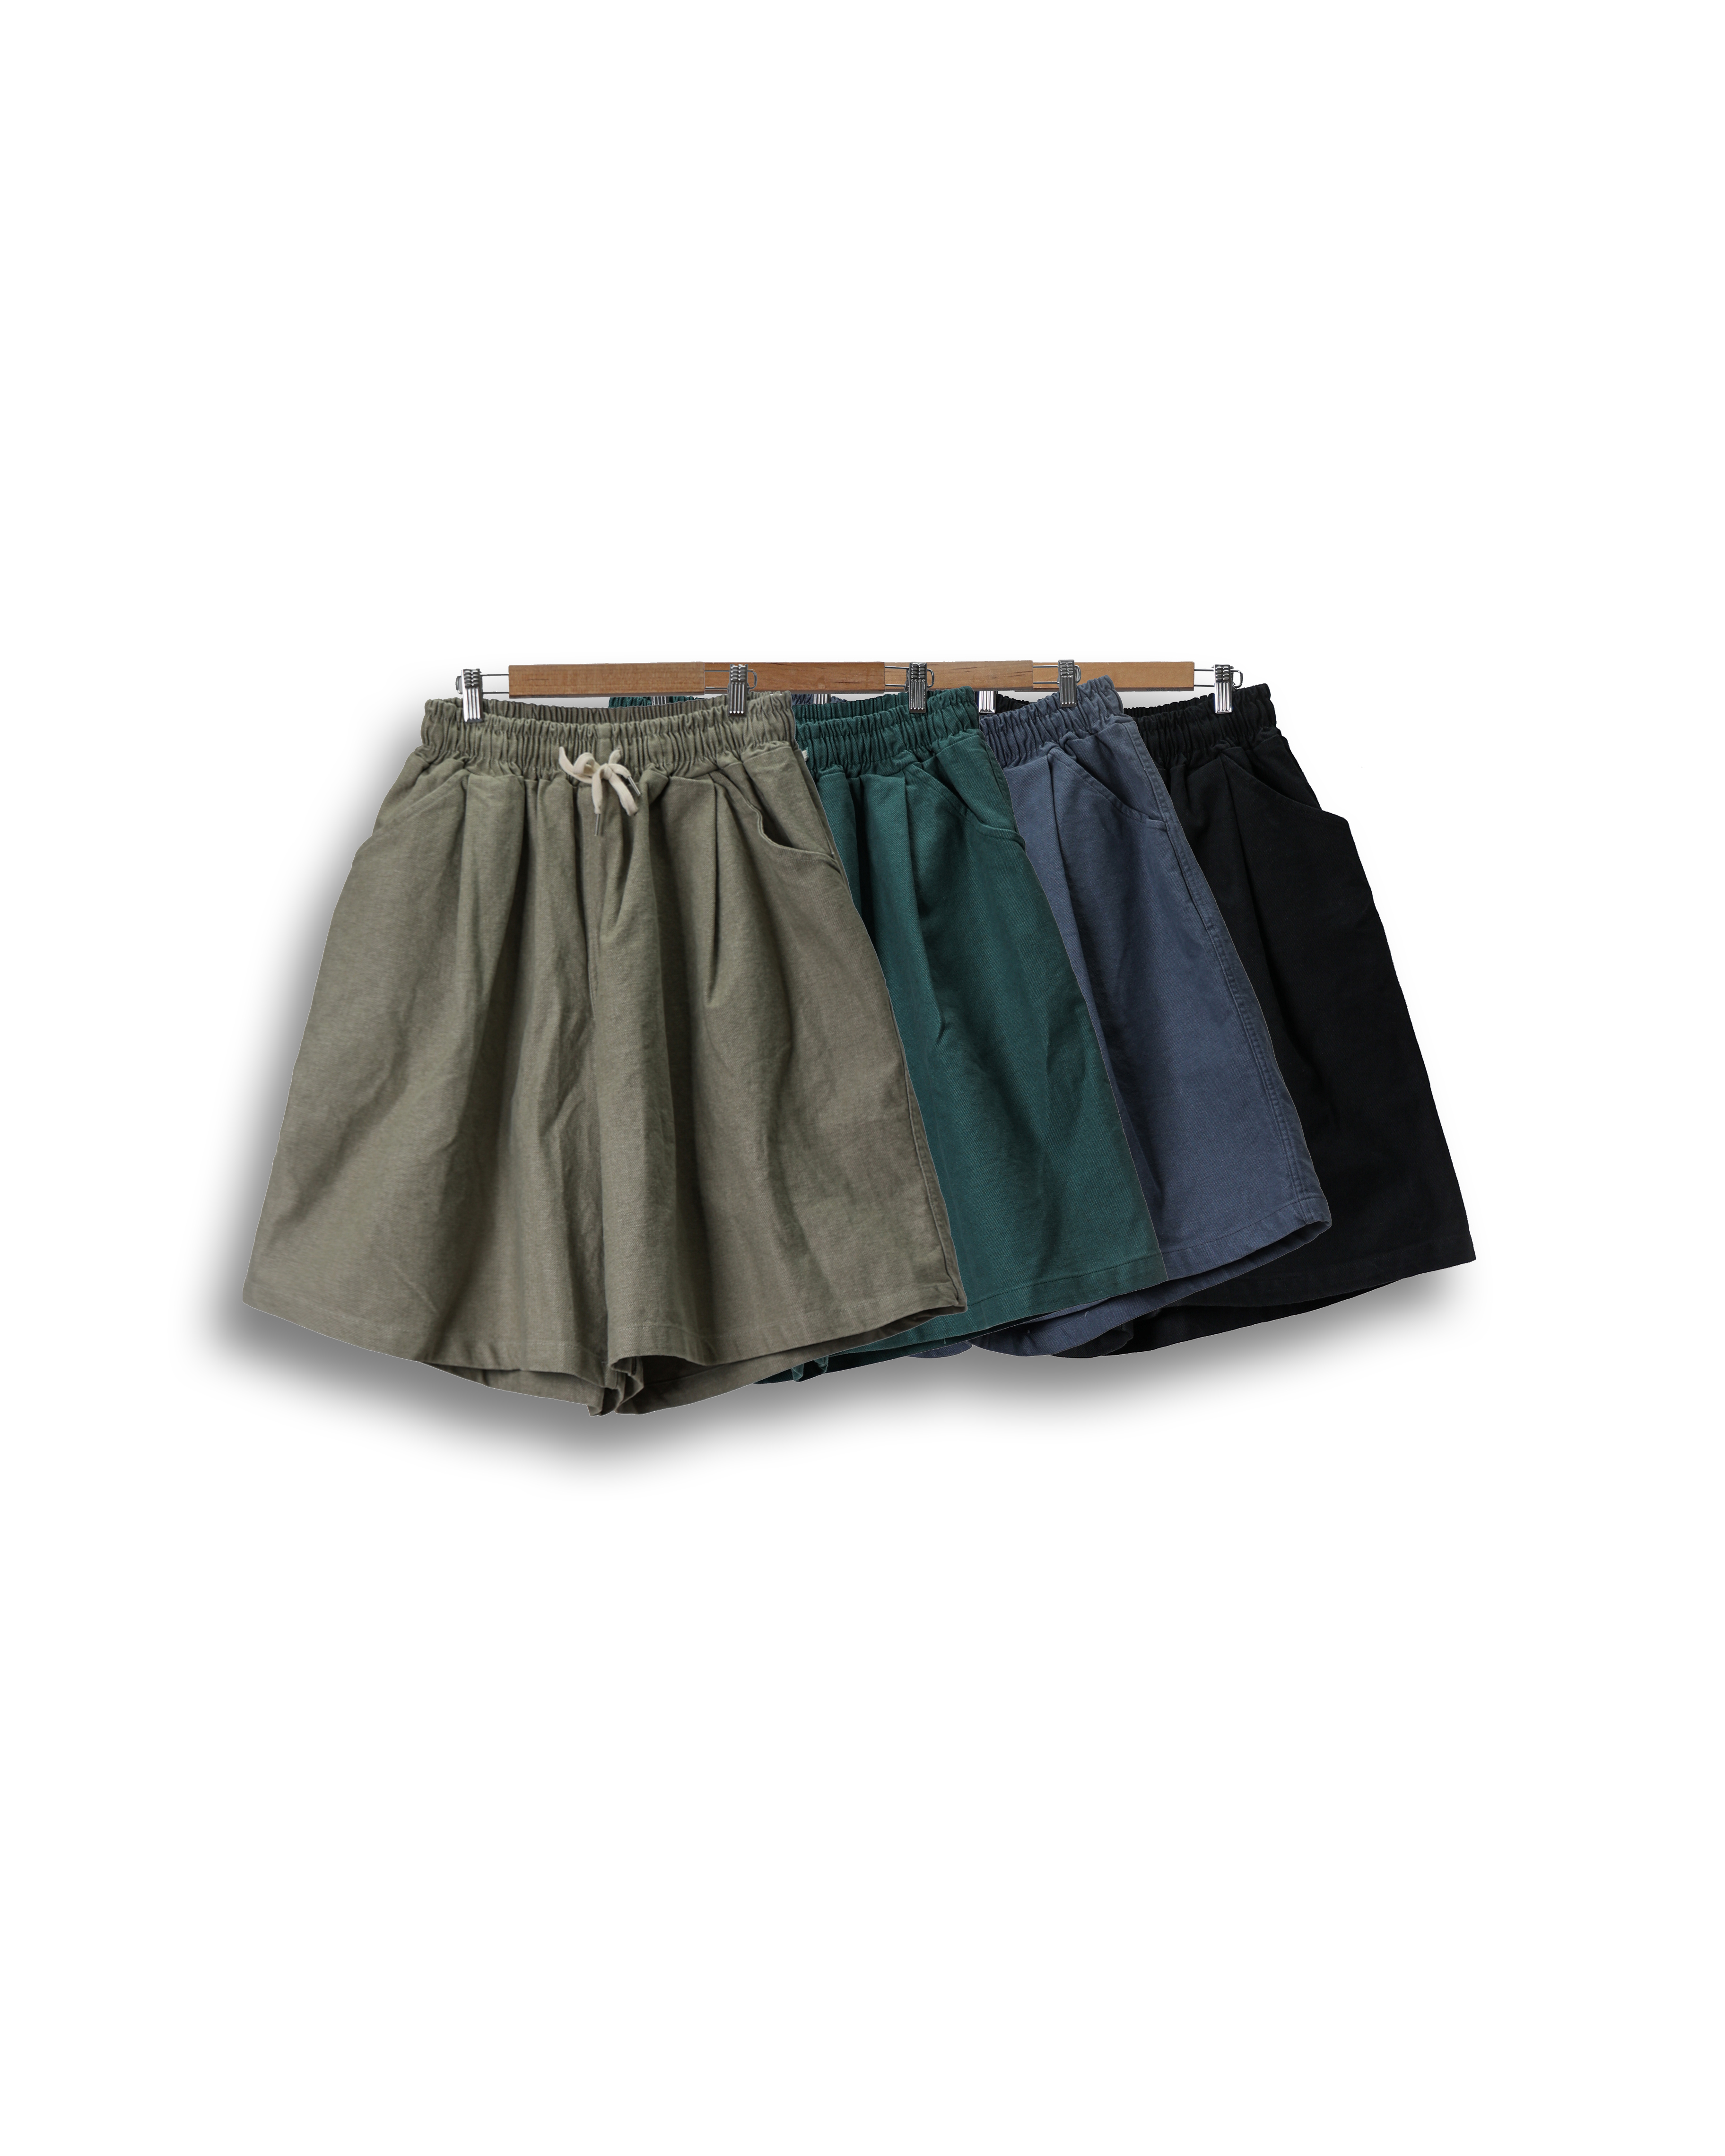 PERCNT Seven Wide Easy Half Pants (Black/Navy/Green/Beige) - 5차 리오더 (4/26 배송예정)